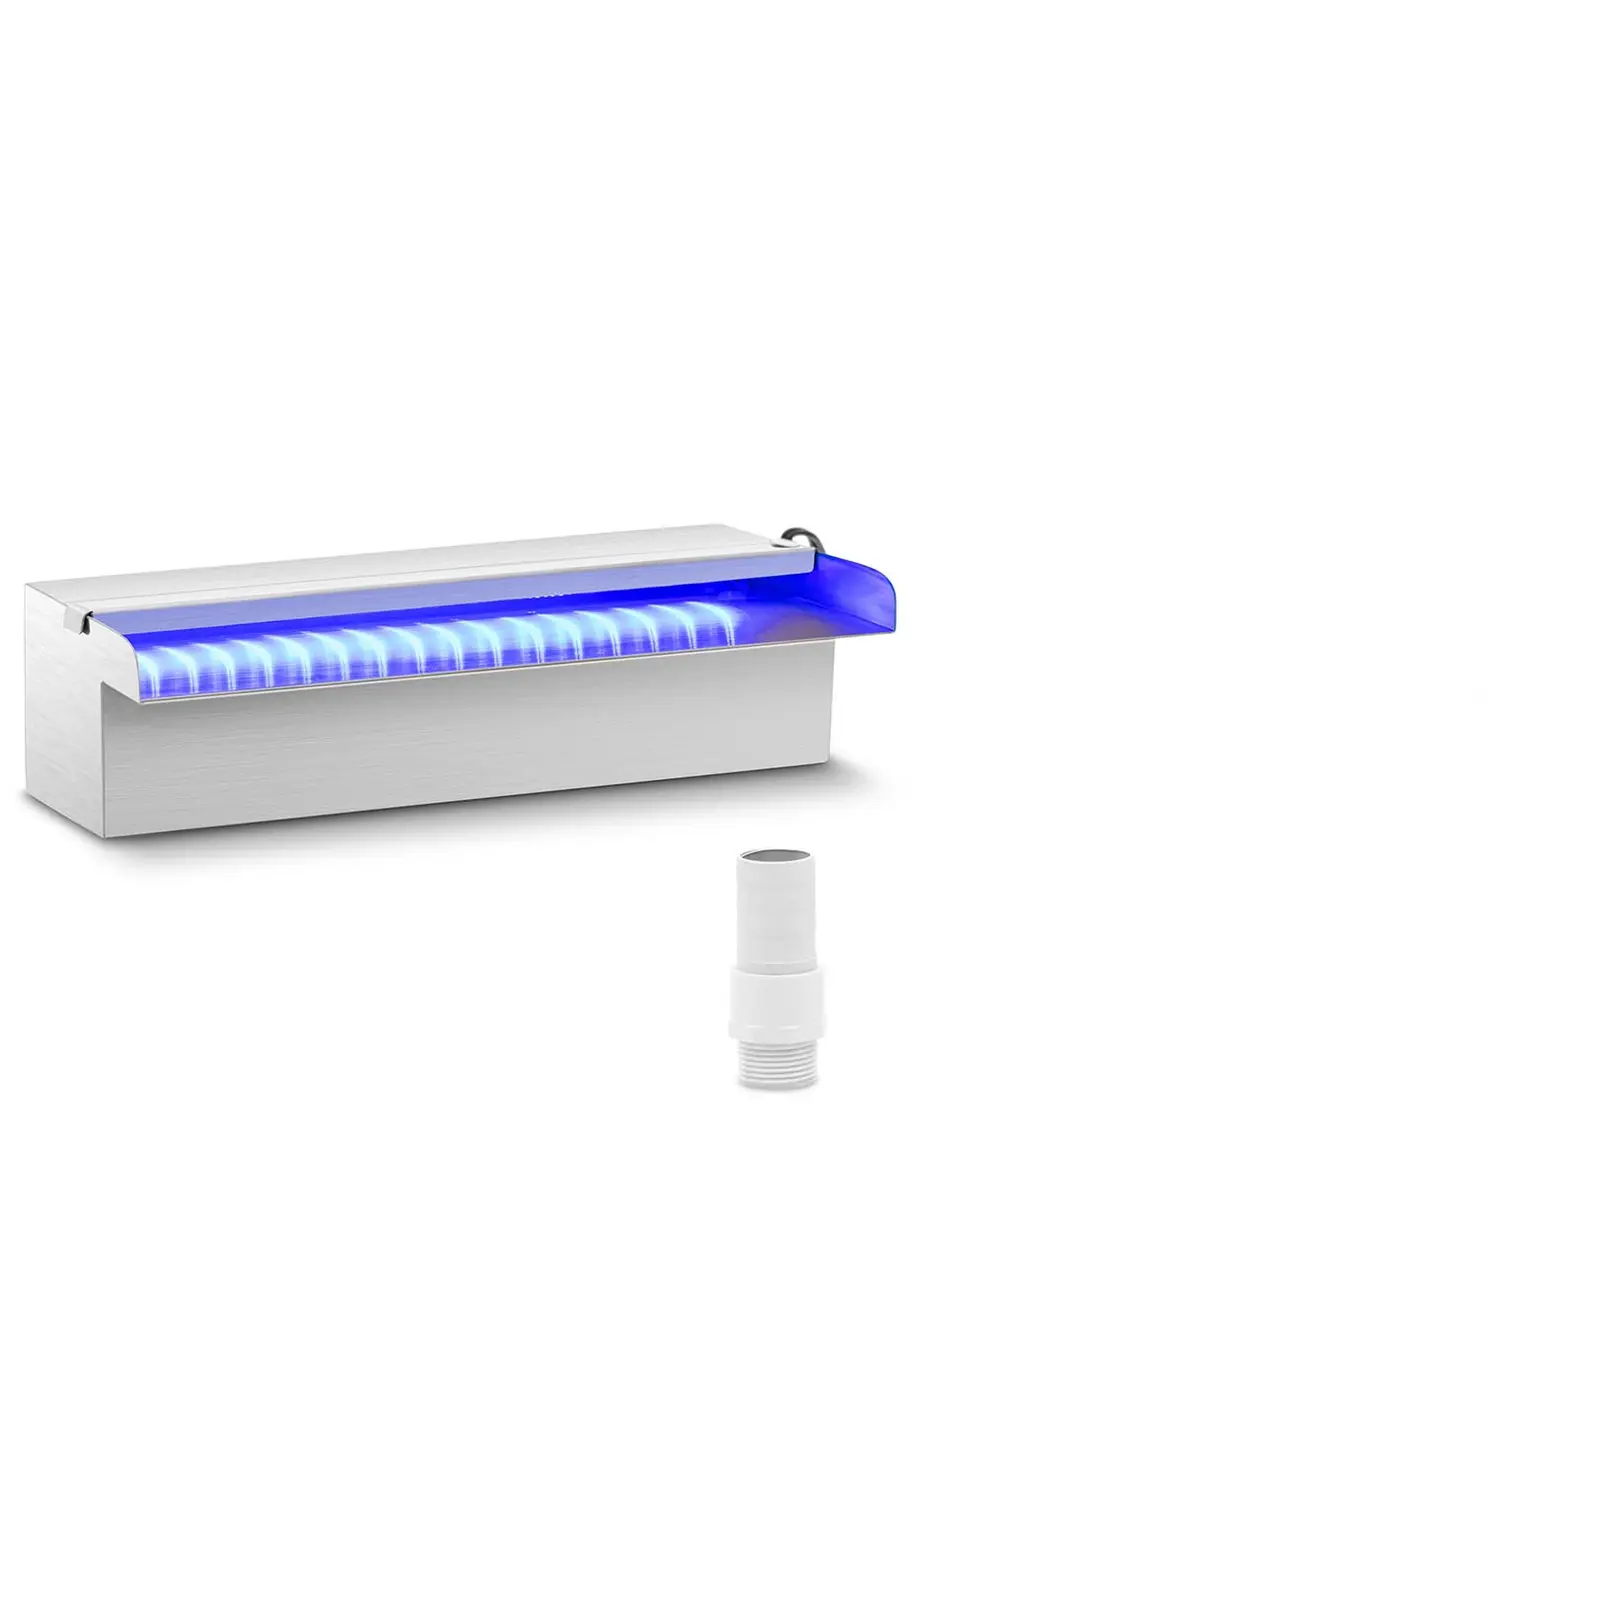 Vattenfall till pool - 30 cm - LED-belysning - Blå / vit